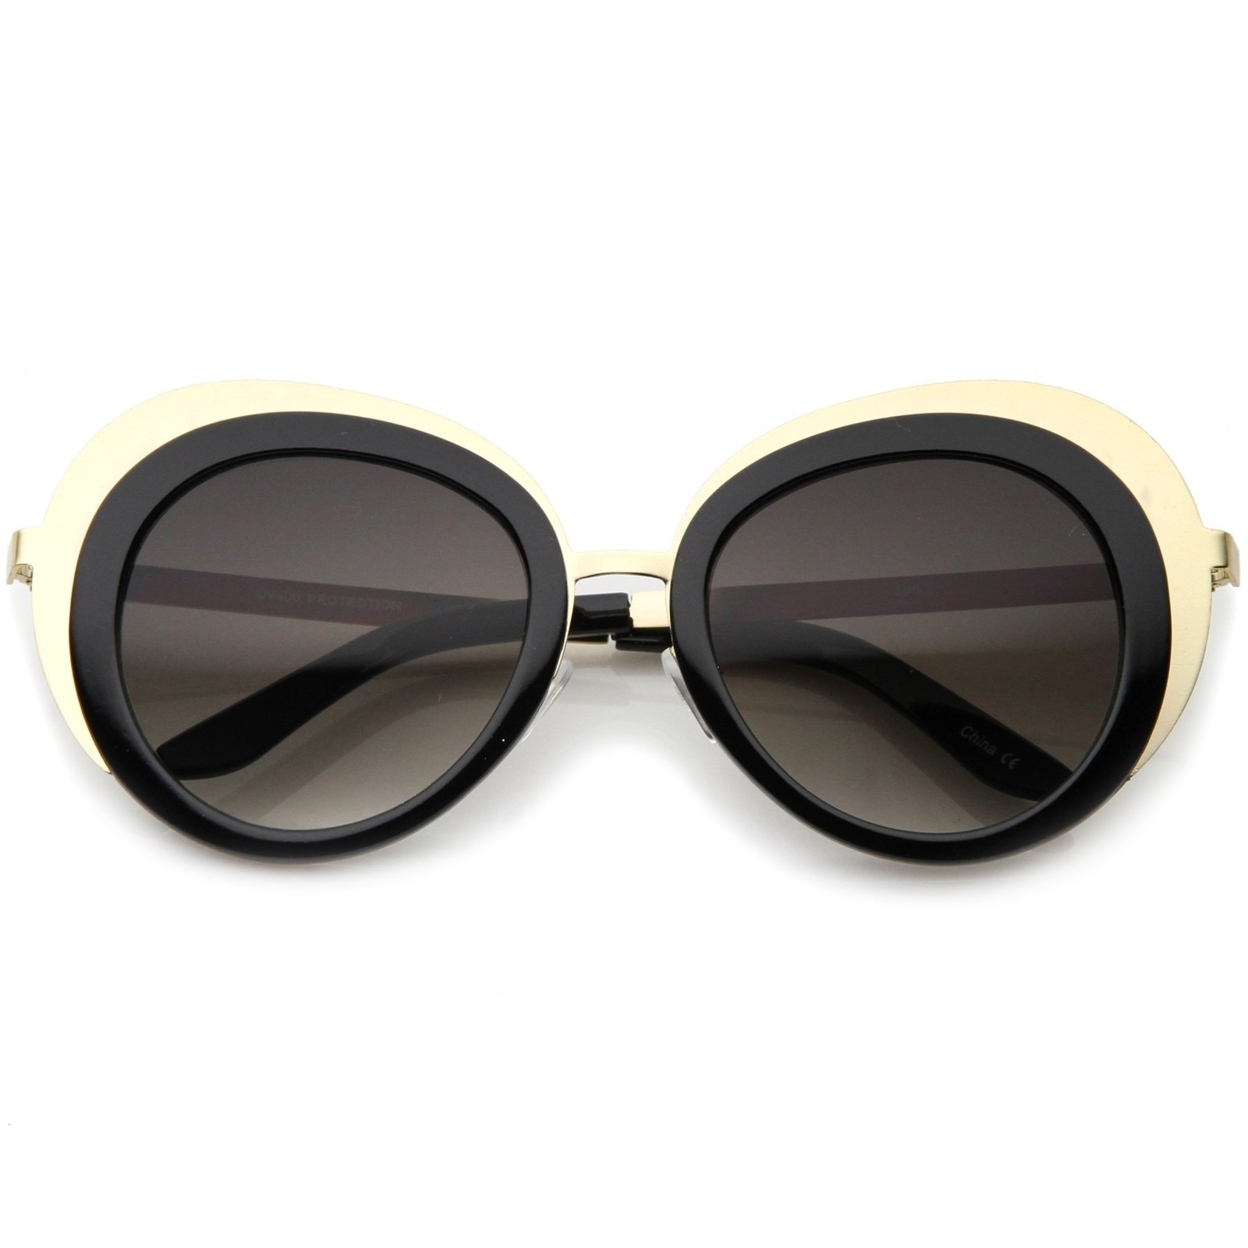 Women's Oversize Two-Tone Metal Frame Border Round Sunglasses 50mm - Gold-White / Amber